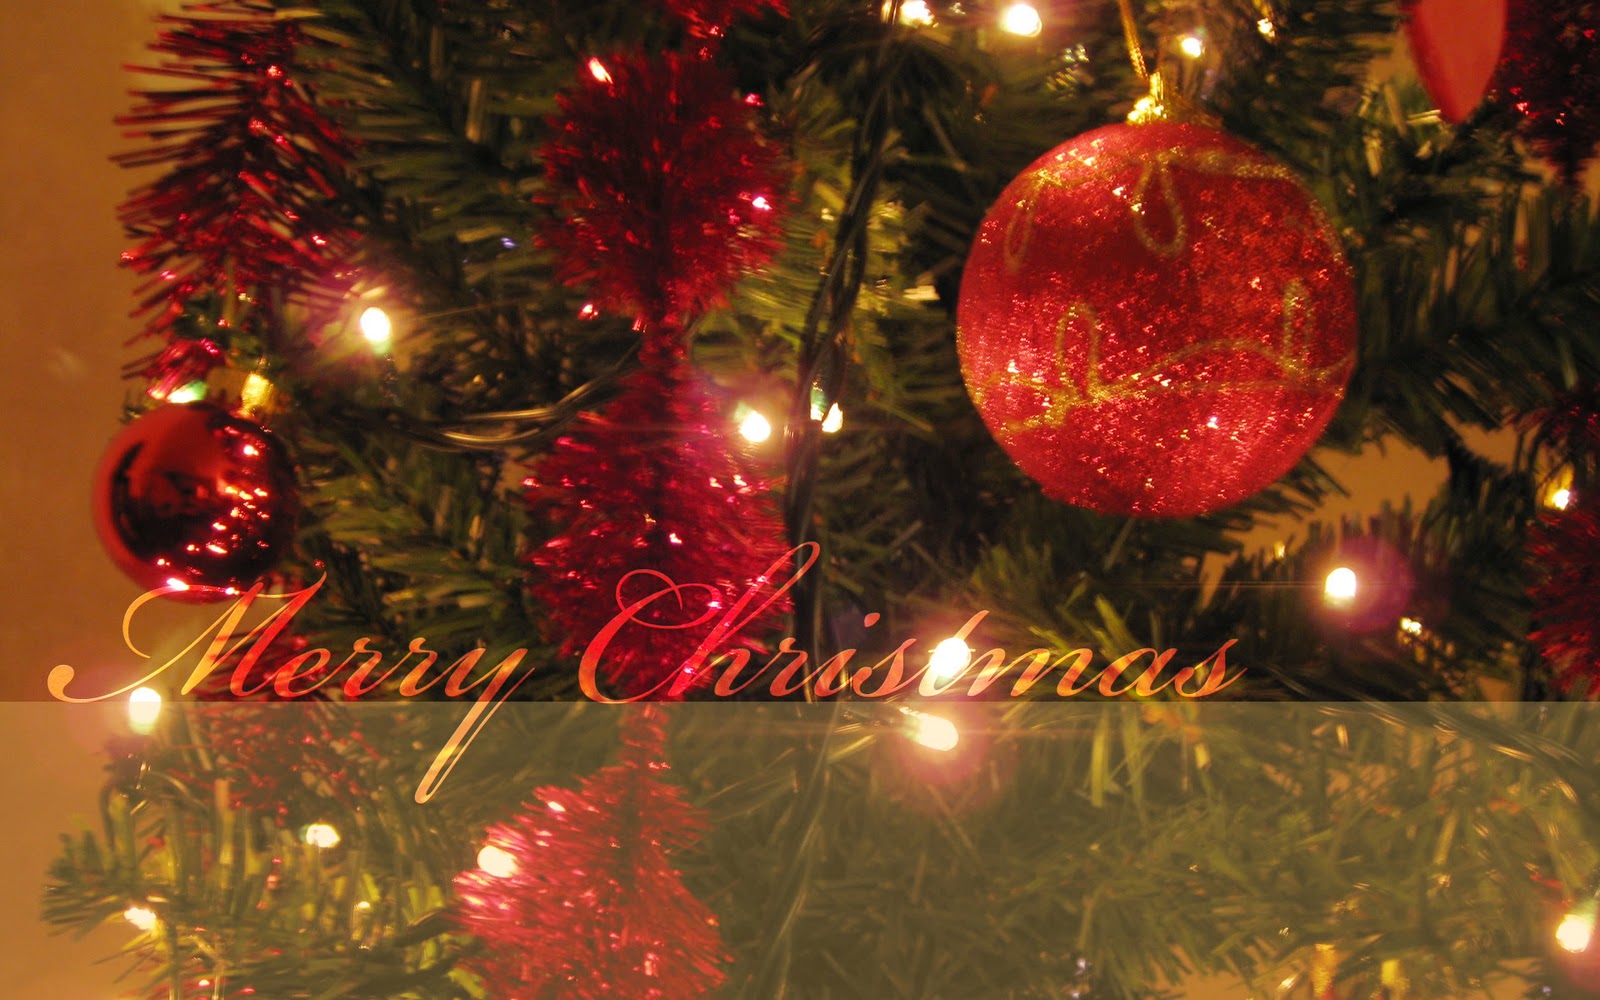 http://3.bp.blogspot.com/-0DnU6IXgYpI/TvXj3JA3SII/AAAAAAAAASk/WUgtqQtVa3g/s1600/christmas+tree+wallpaper.jpg